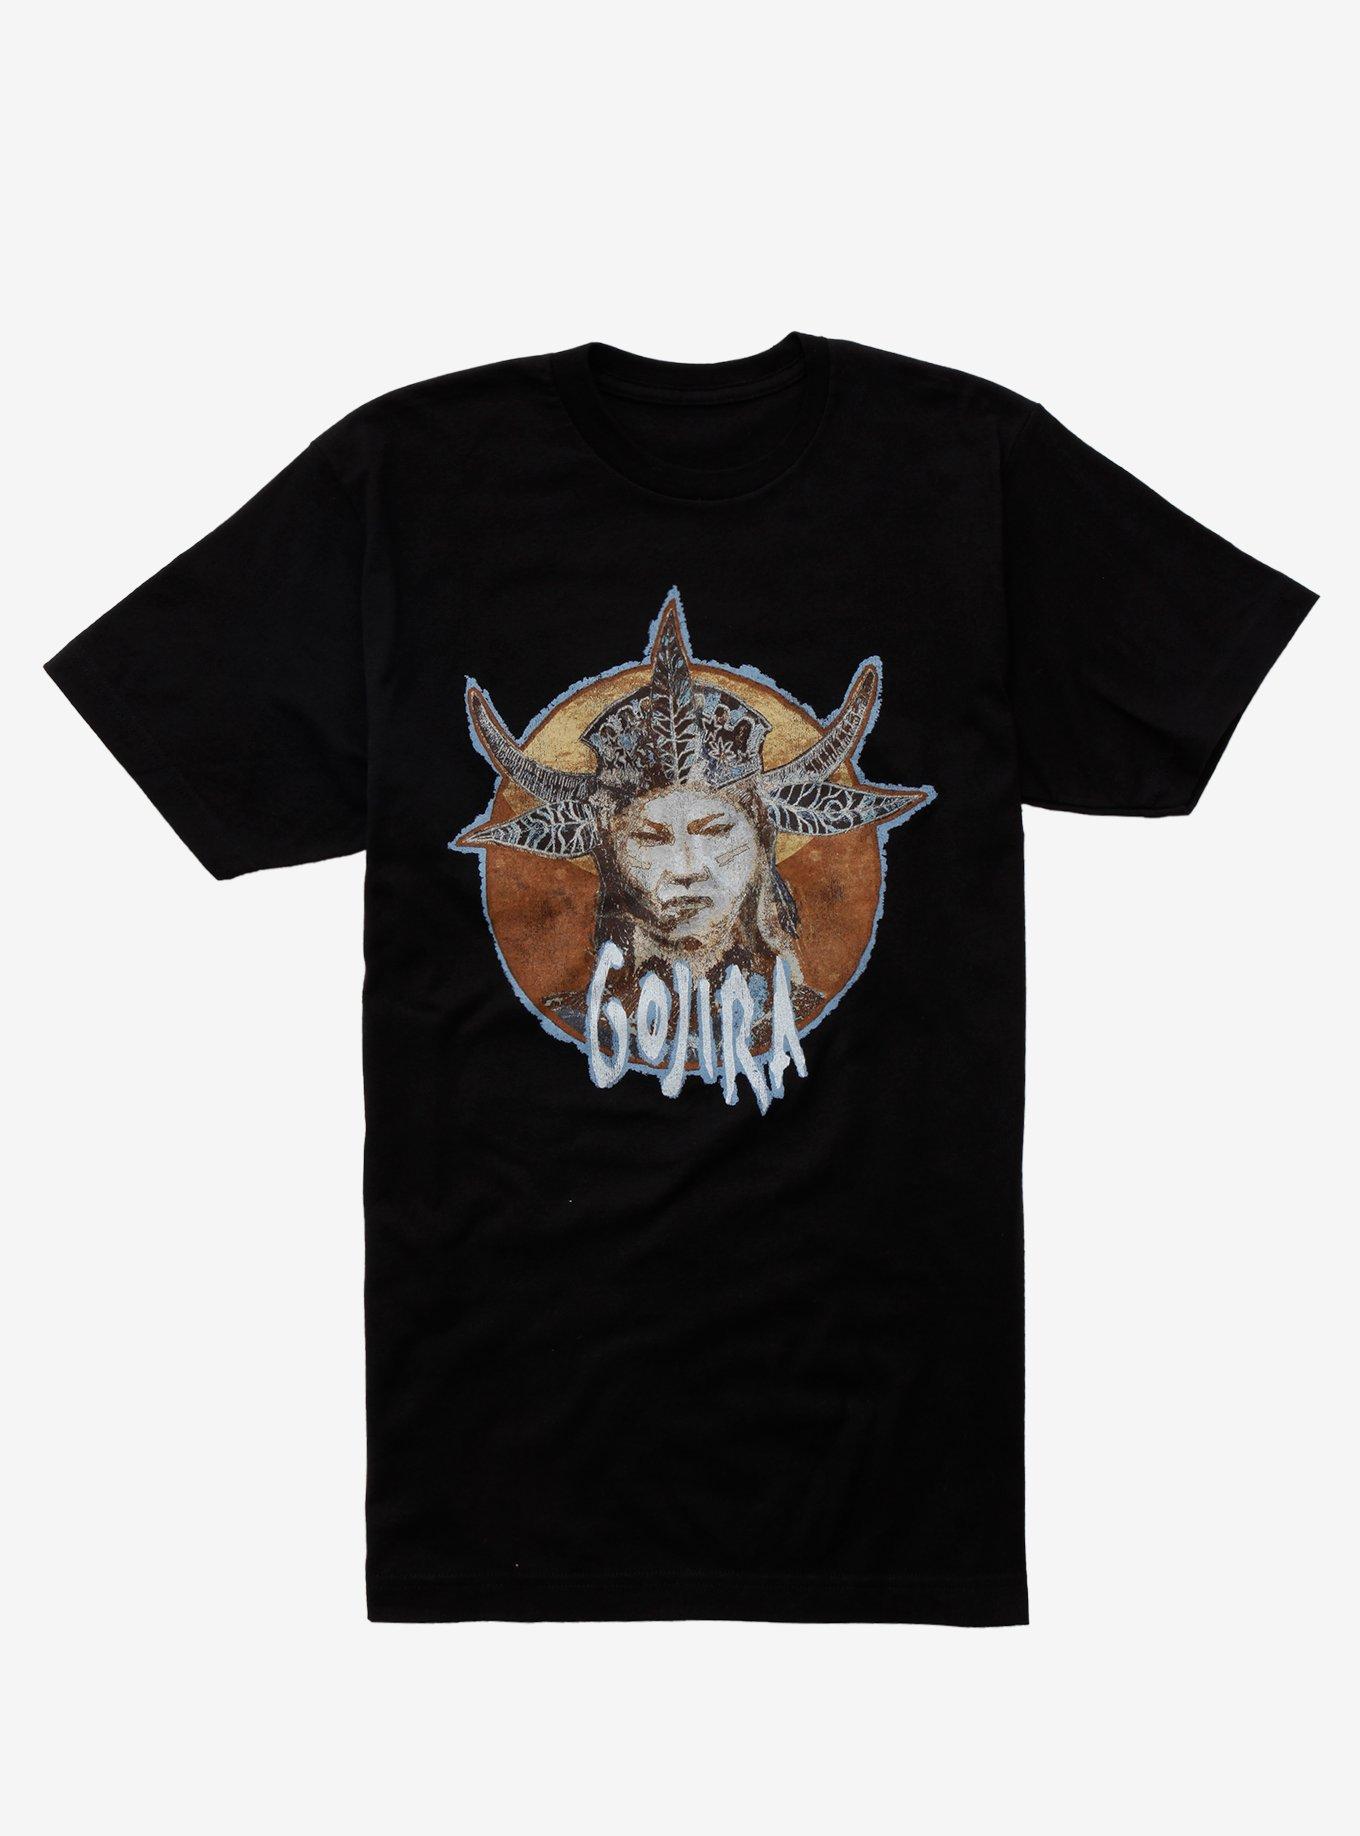 Gojira Fortitude Album Cover T-Shirt, BLACK, hi-res